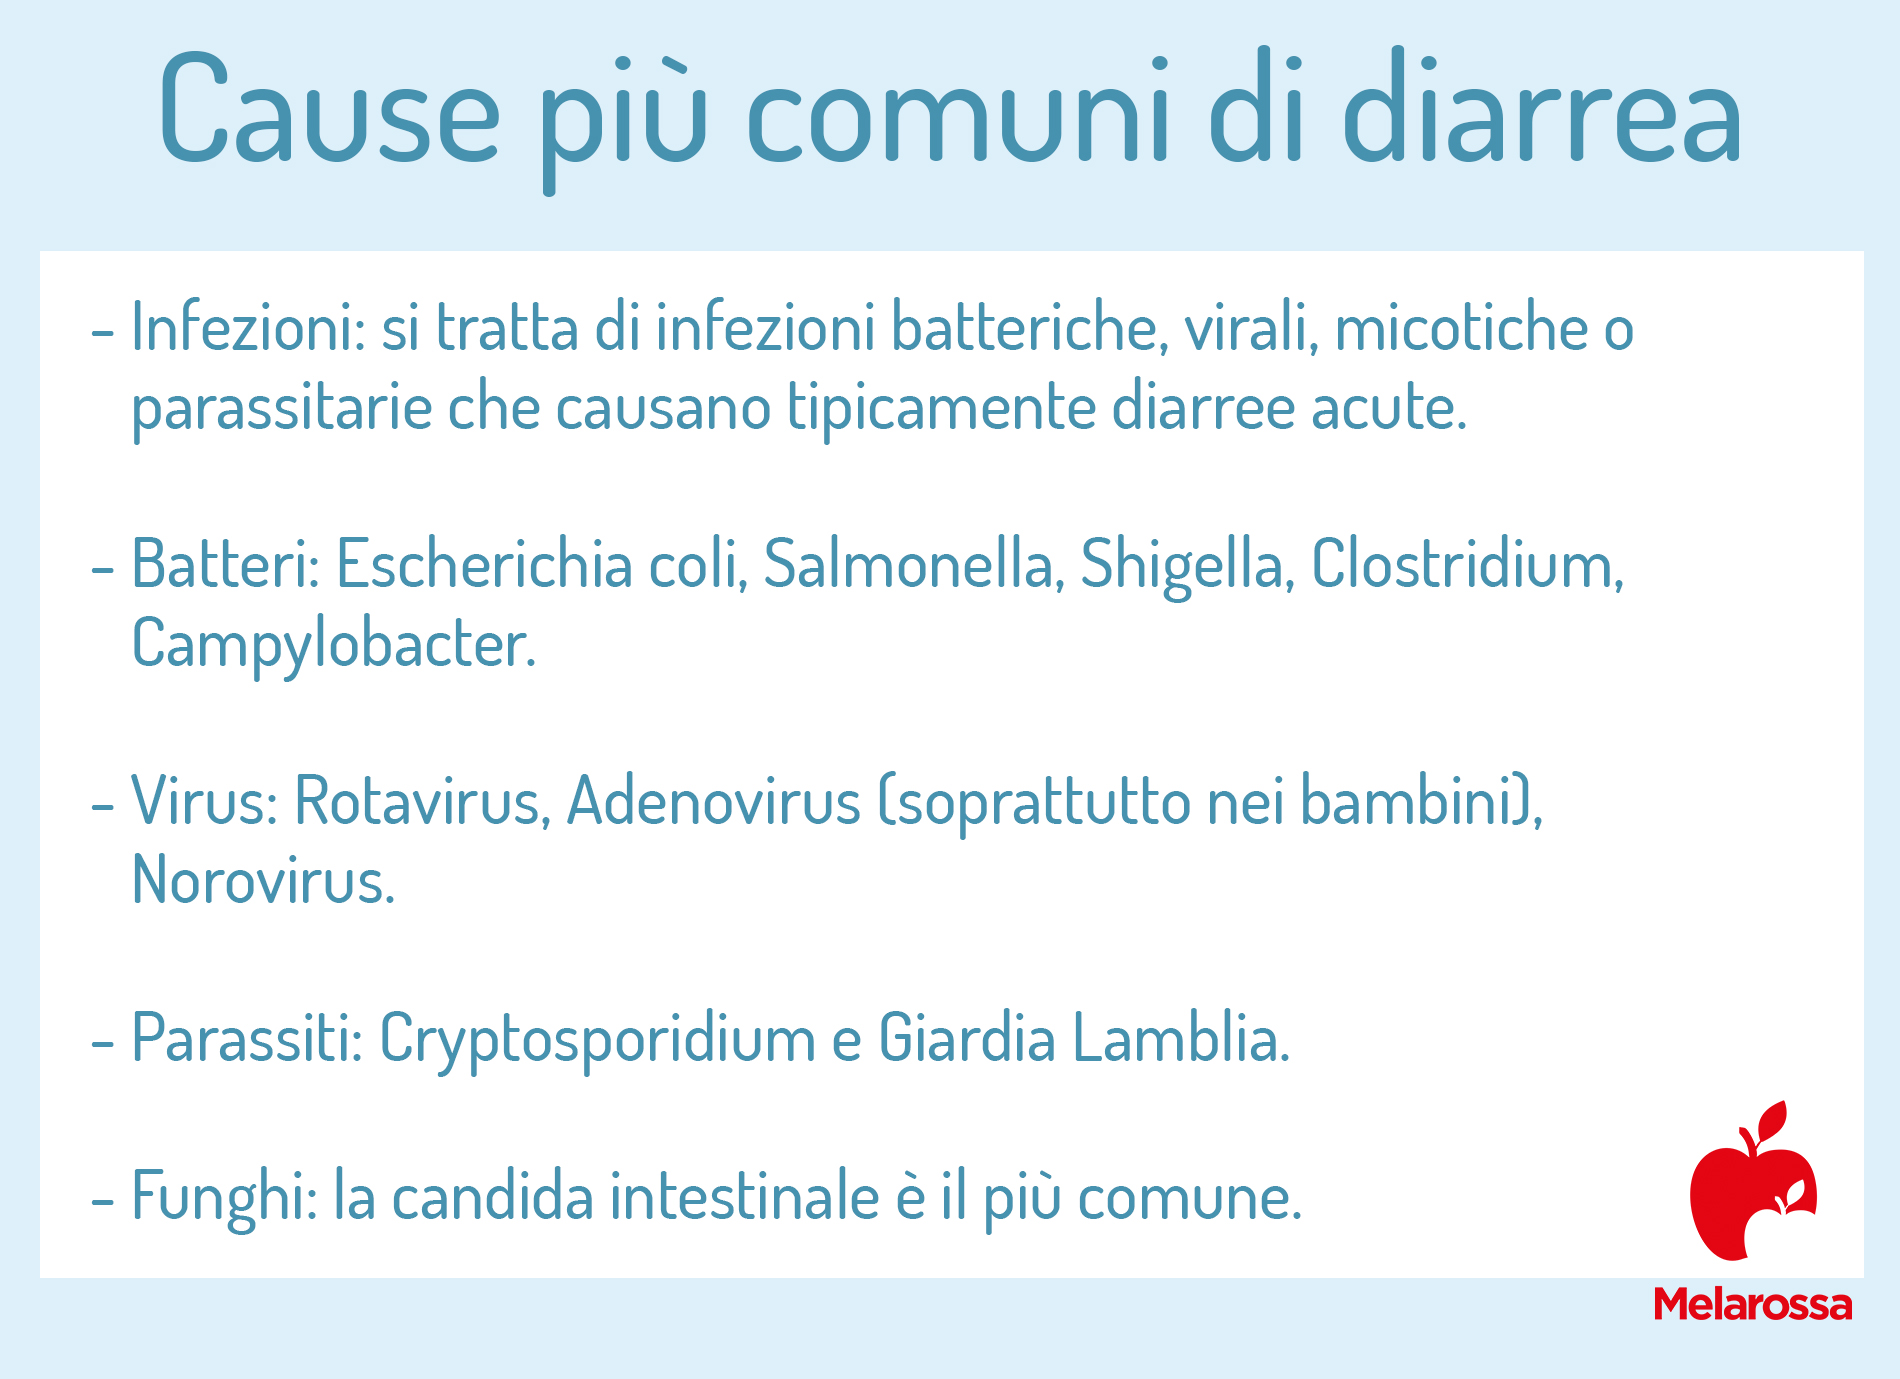 diarrea: cause comuni